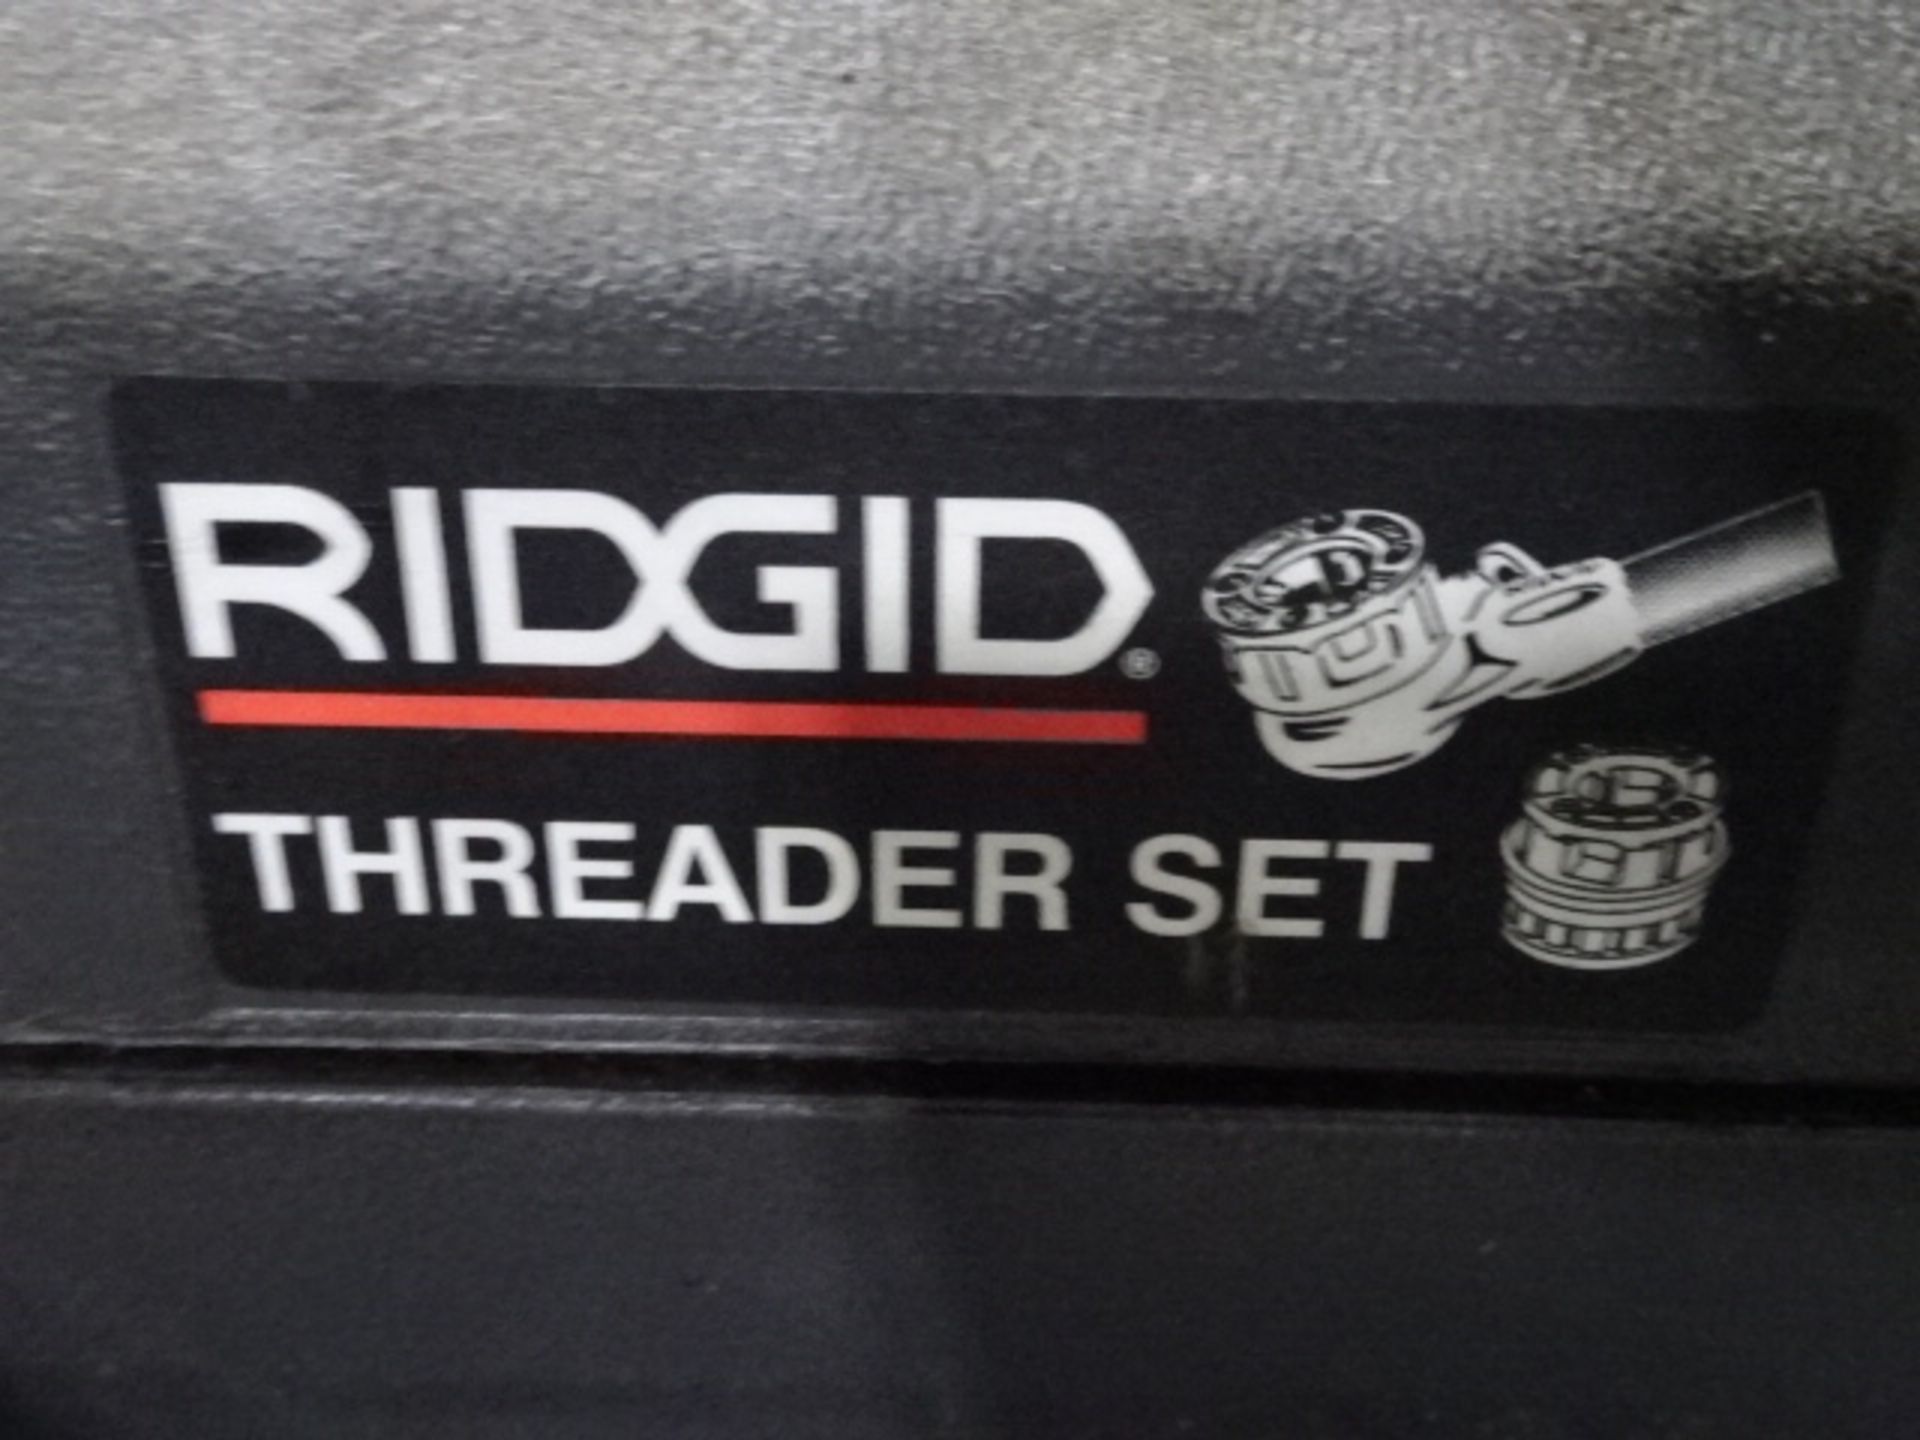 Ridgid Pipe Threader with Pipe Threader Set - Image 5 of 5